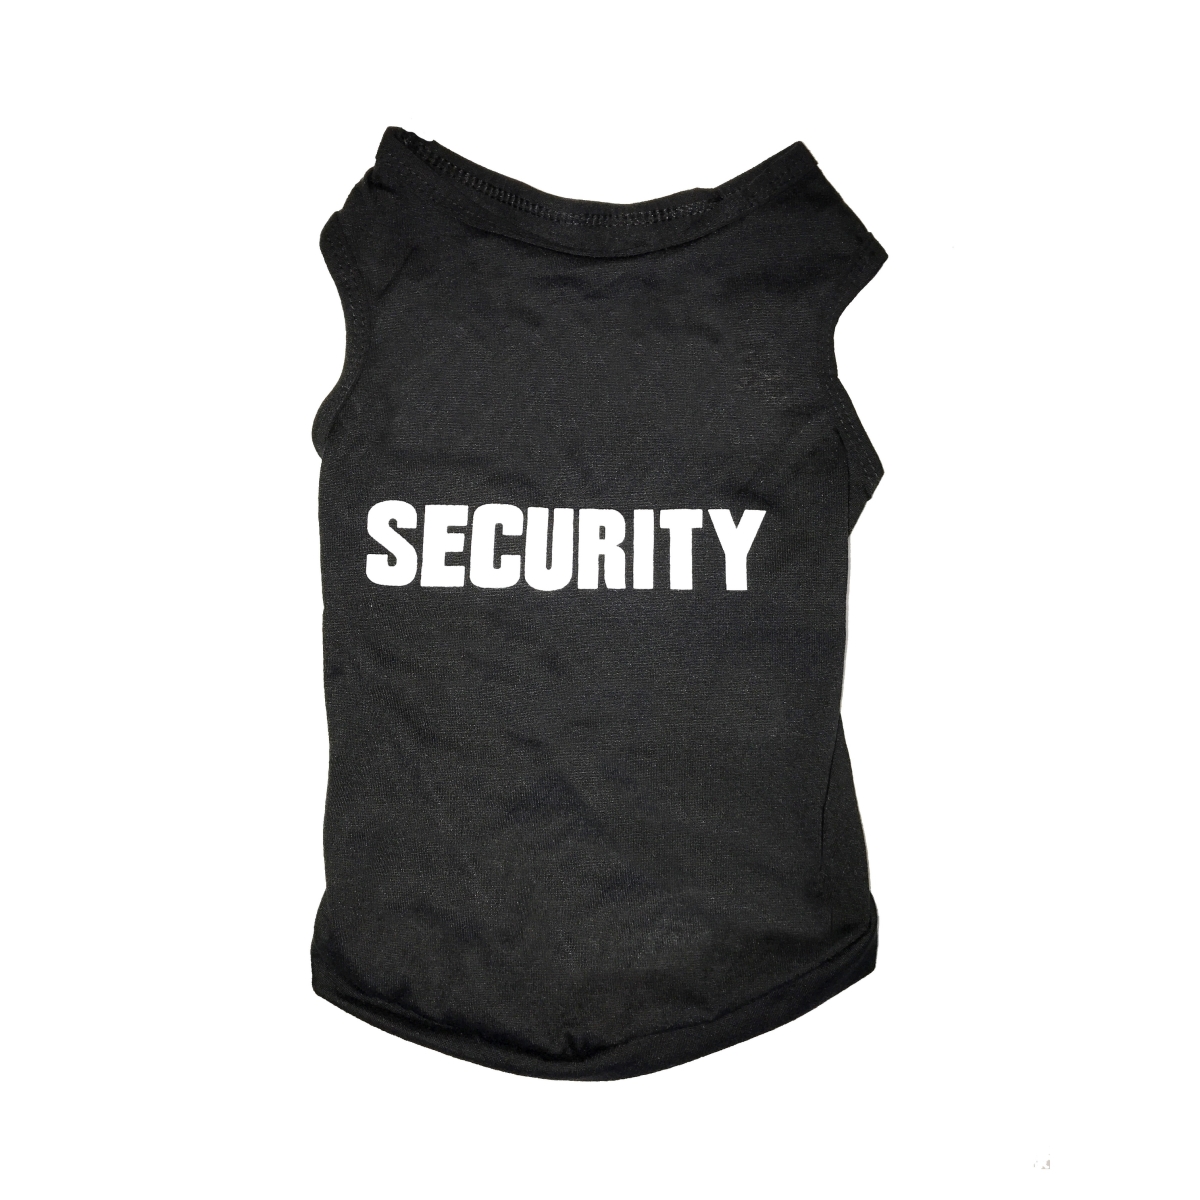 Dgsect-m Security Tee, Black - Medium